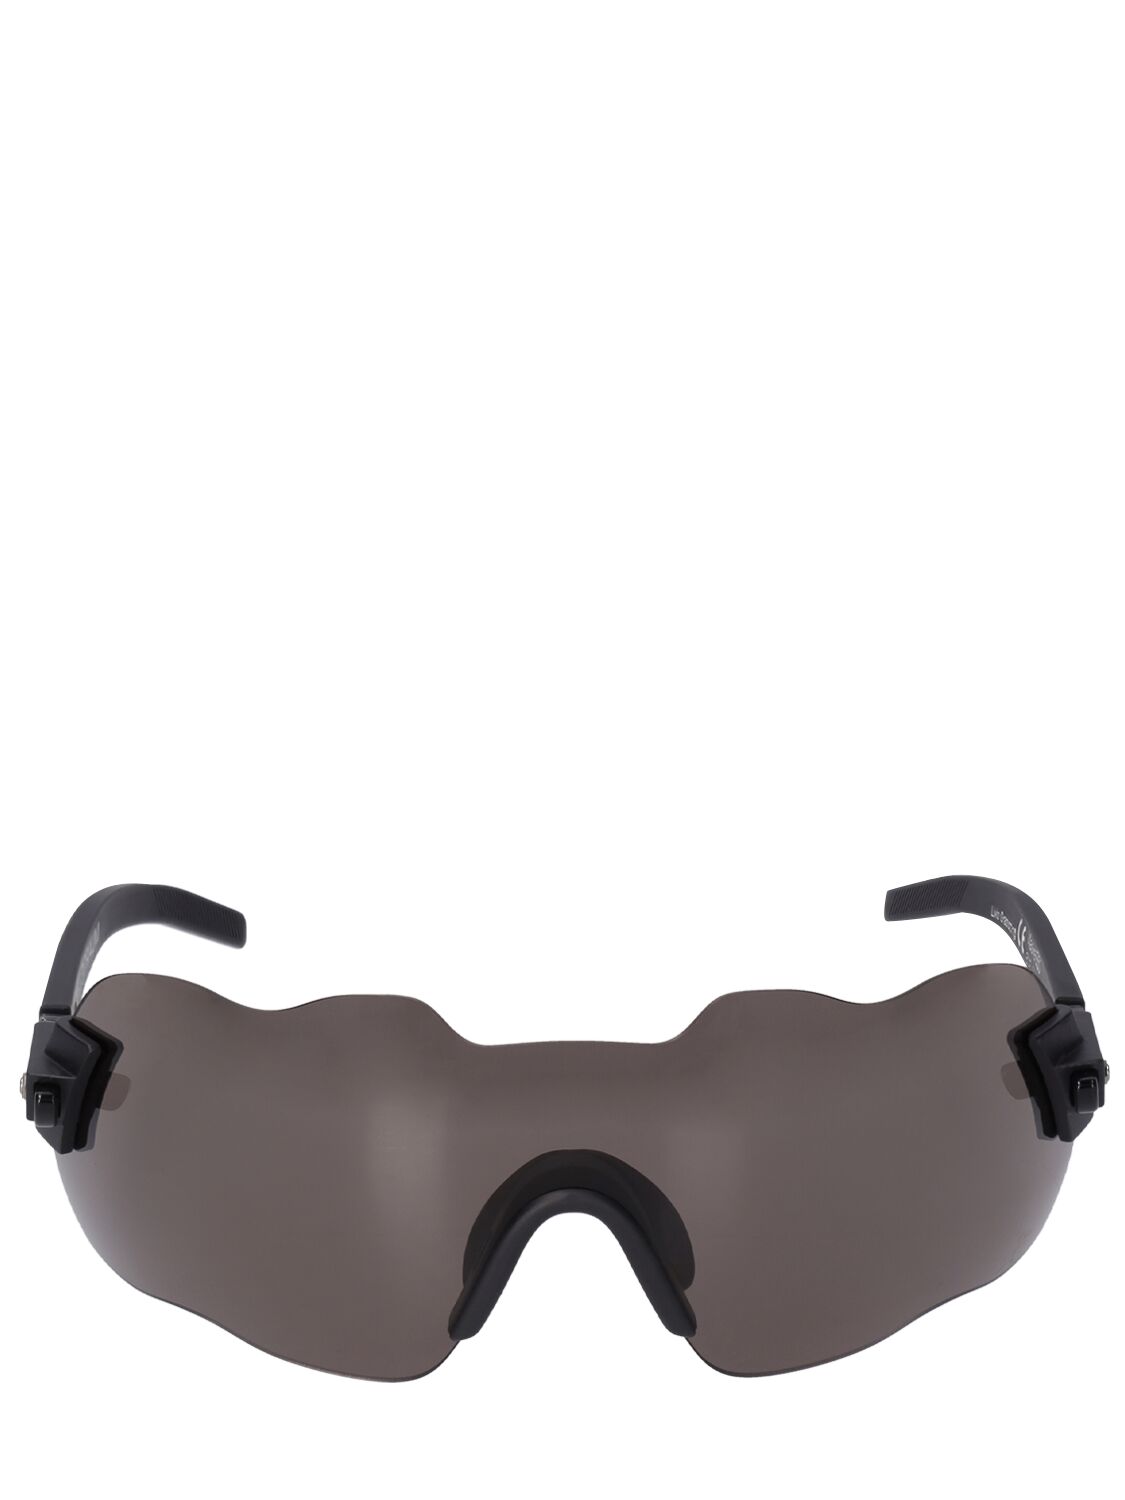 Kuboraum Berlin E50 Mask Sunglasses In Black